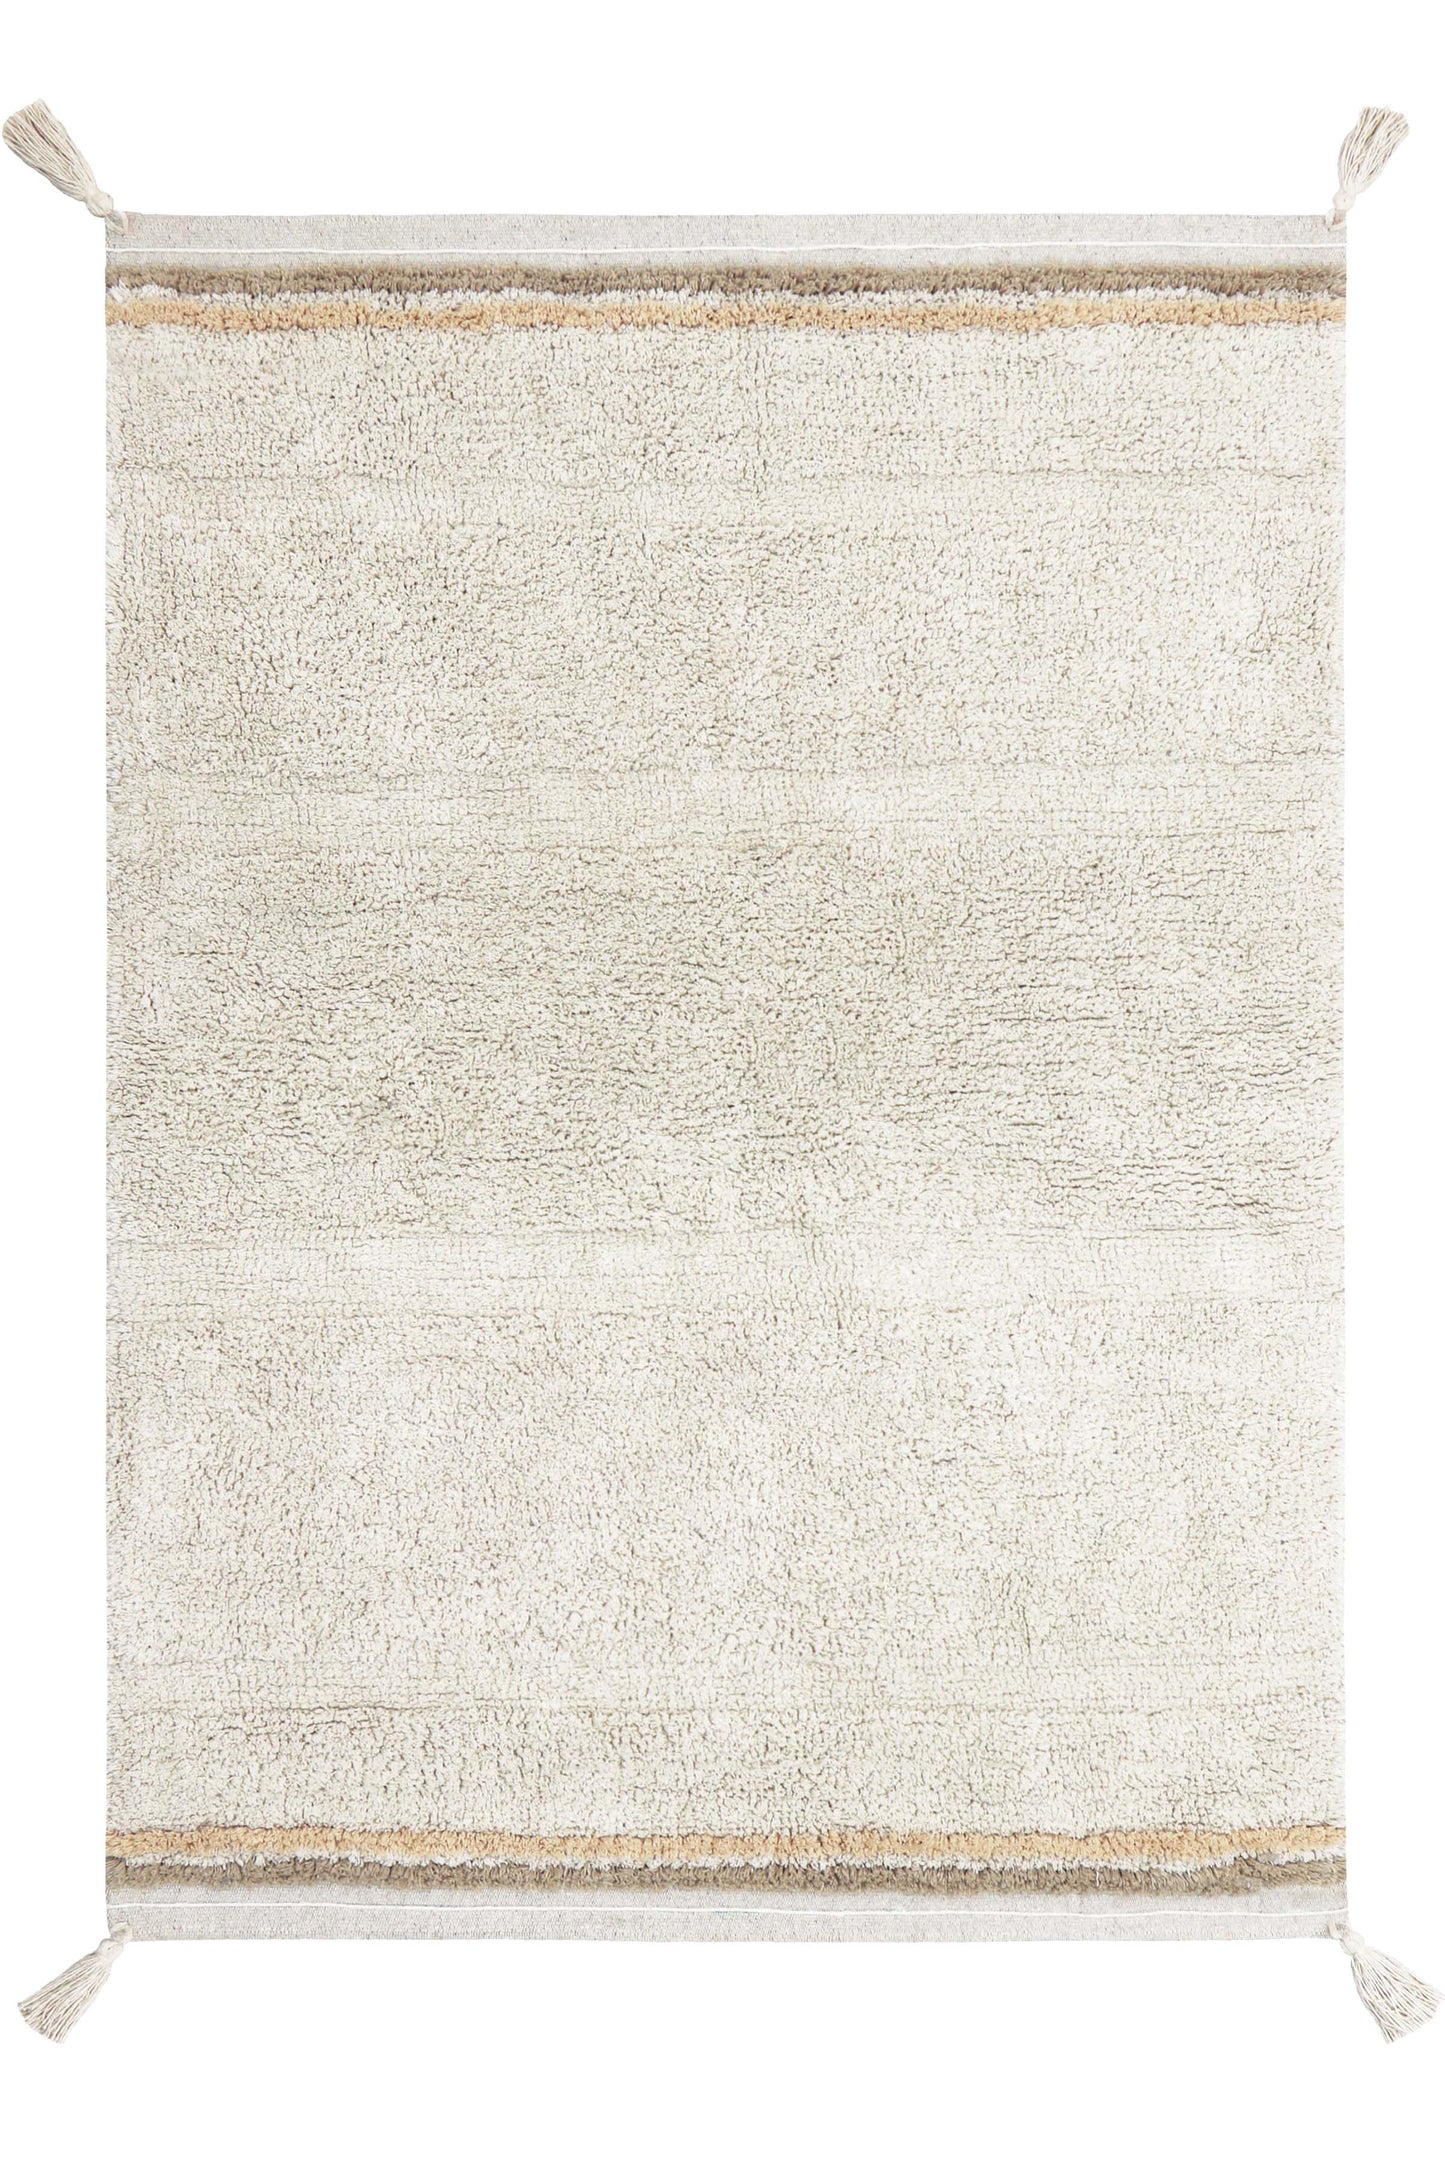 Lorena Canals Washable cotton rug - Bloom Natural L - 170x240cm